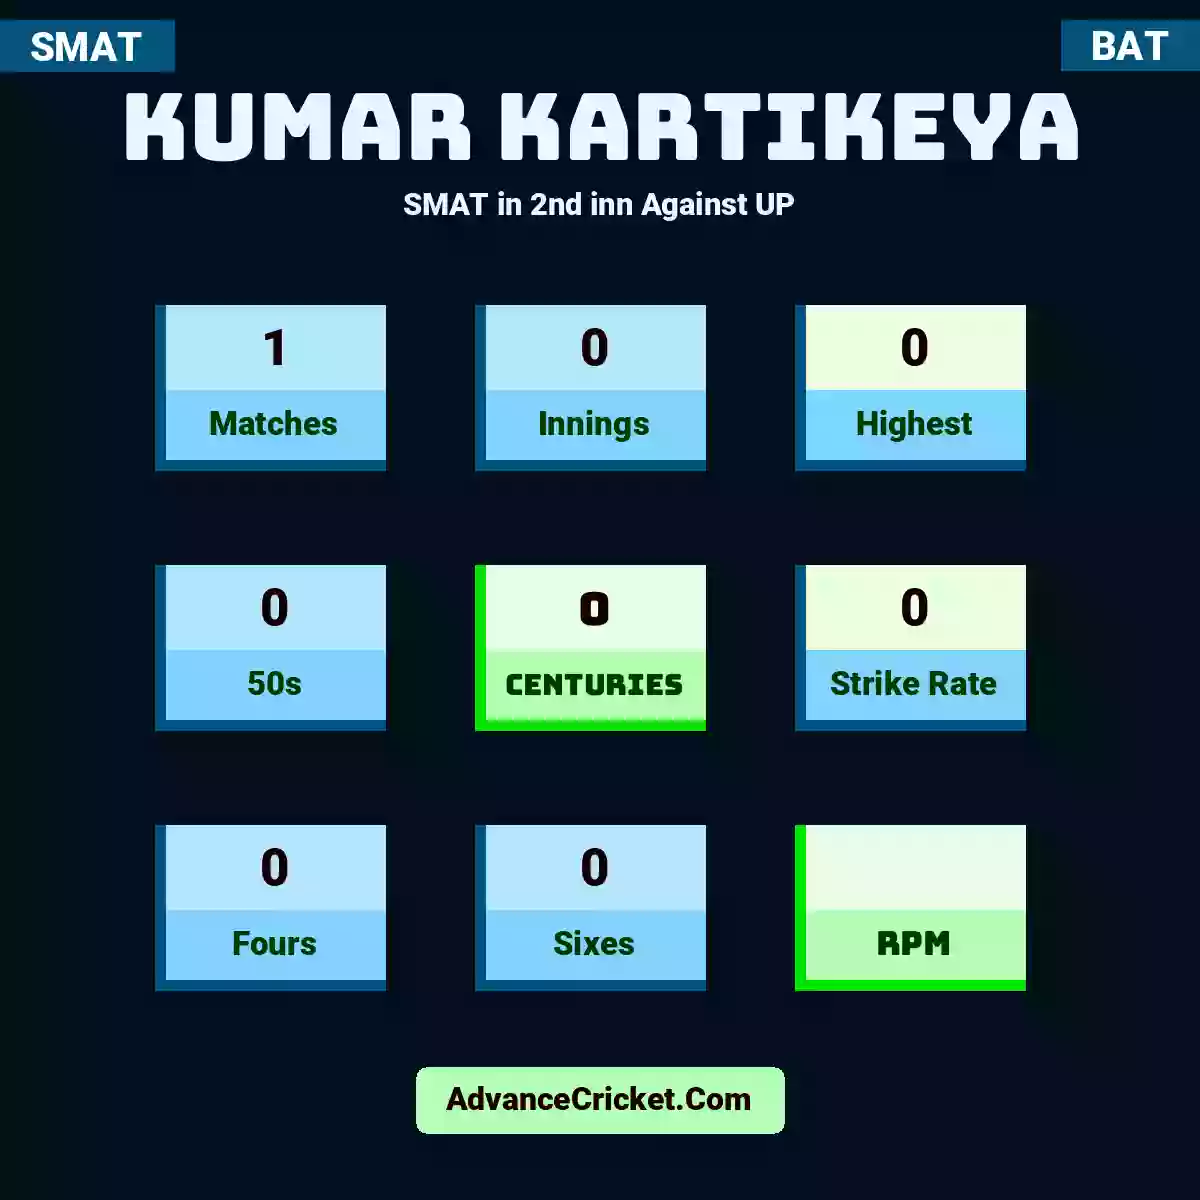 Kumar Kartikeya SMAT  in 2nd inn Against UP, Kumar Kartikeya played 1 matches, scored 0 runs as highest, 0 half-centuries, and 0 centuries, with a strike rate of 0. K.Kartikeya hit 0 fours and 0 sixes.